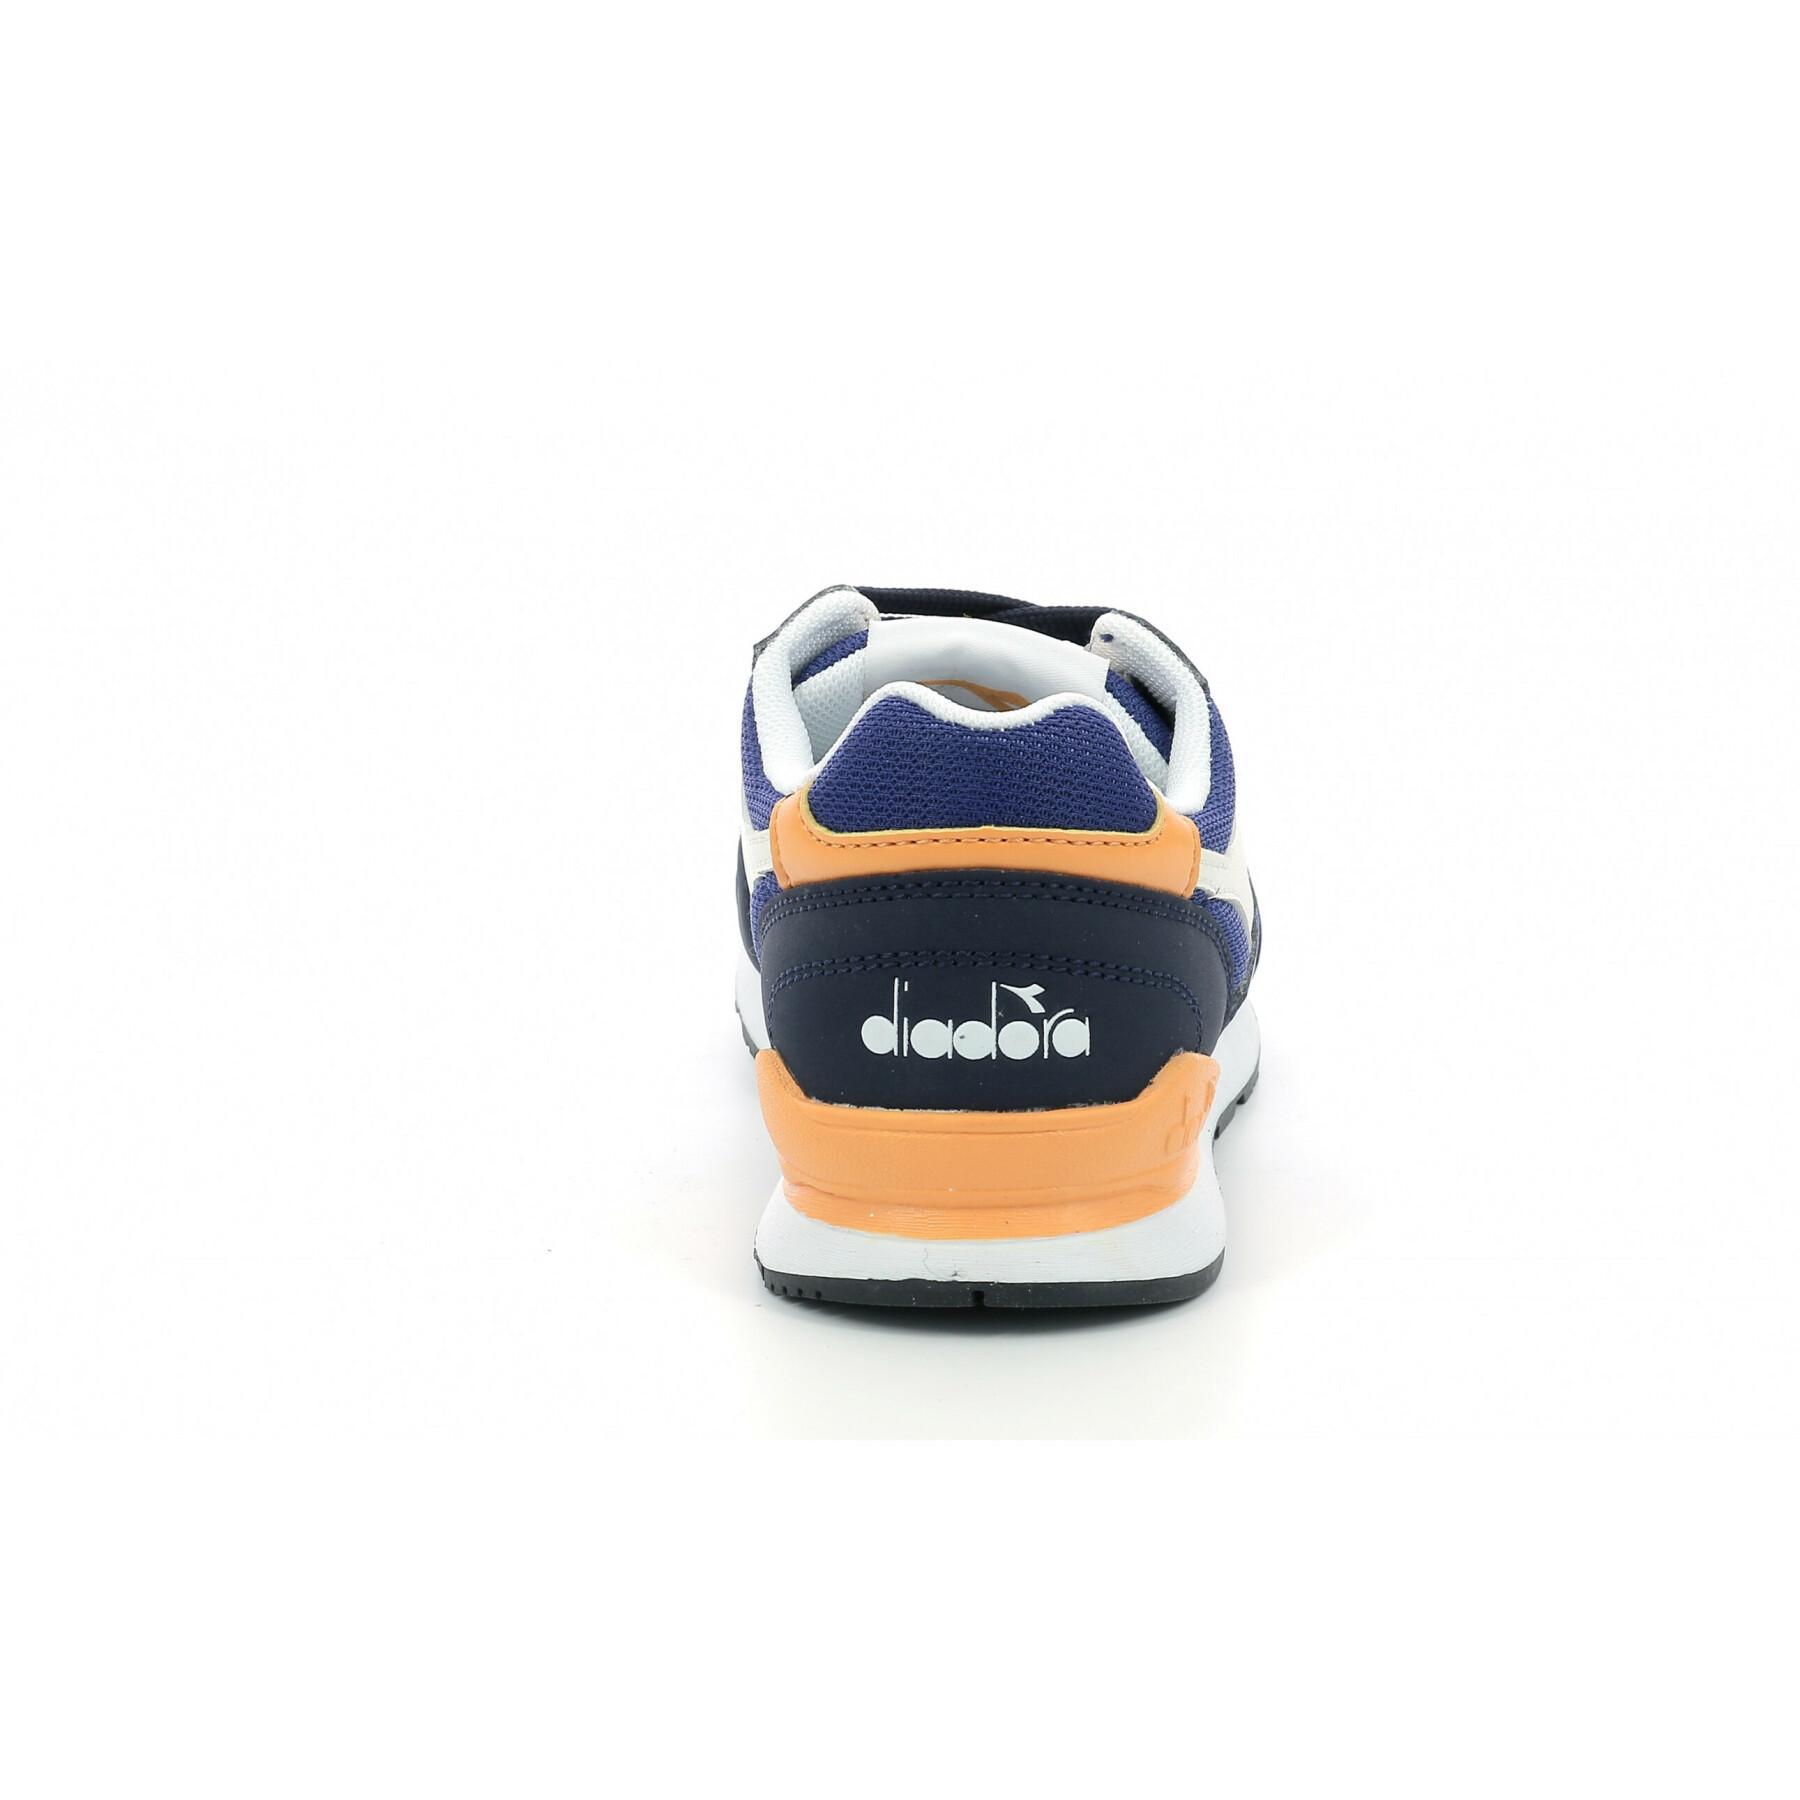 Children's sneakers Diadora N.92 Ps Classic